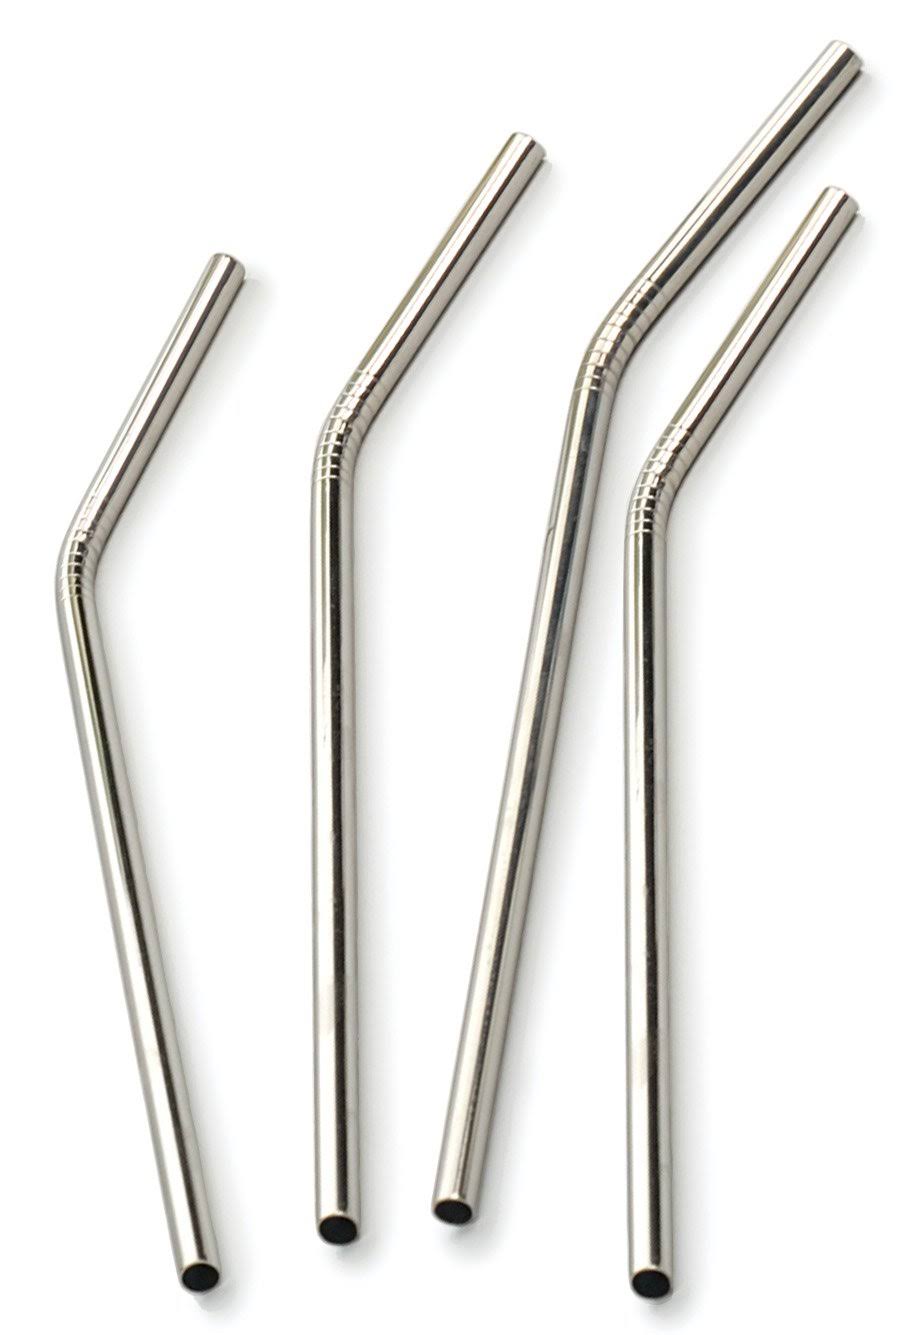 Danesco - Set of 4 Stainless Steel Straws